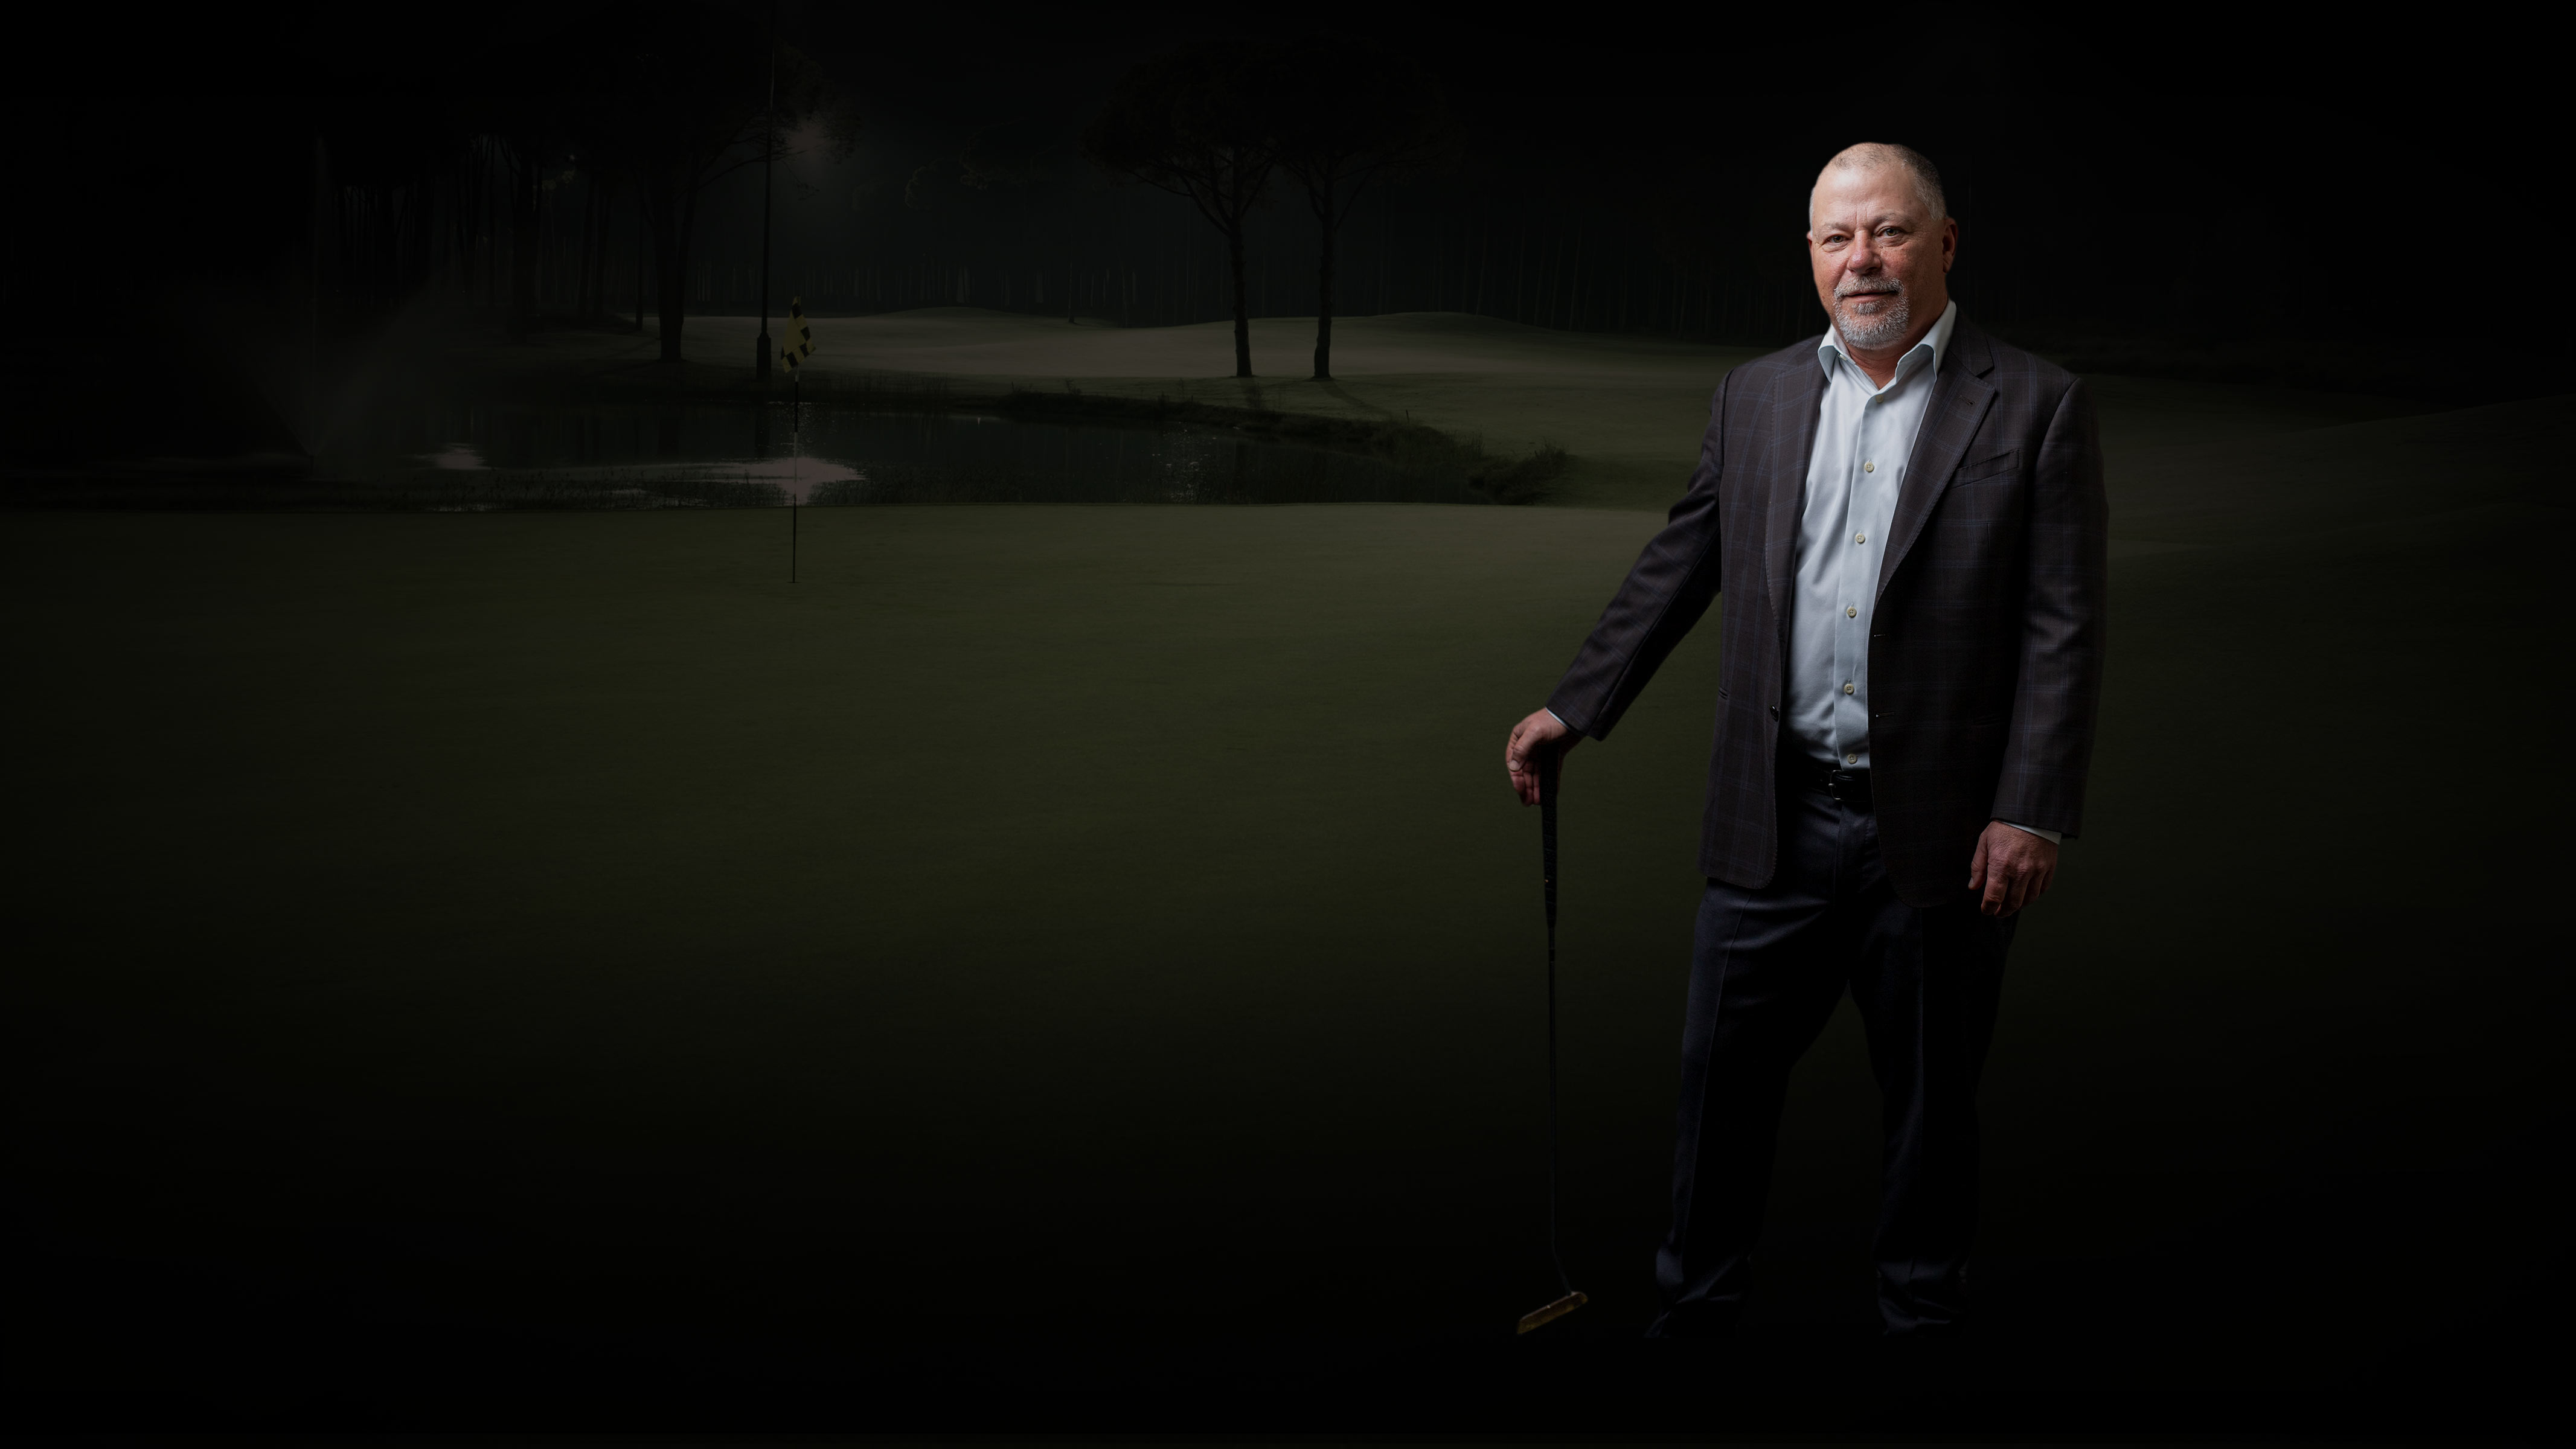 John Jenkins, VP, holding a golf club